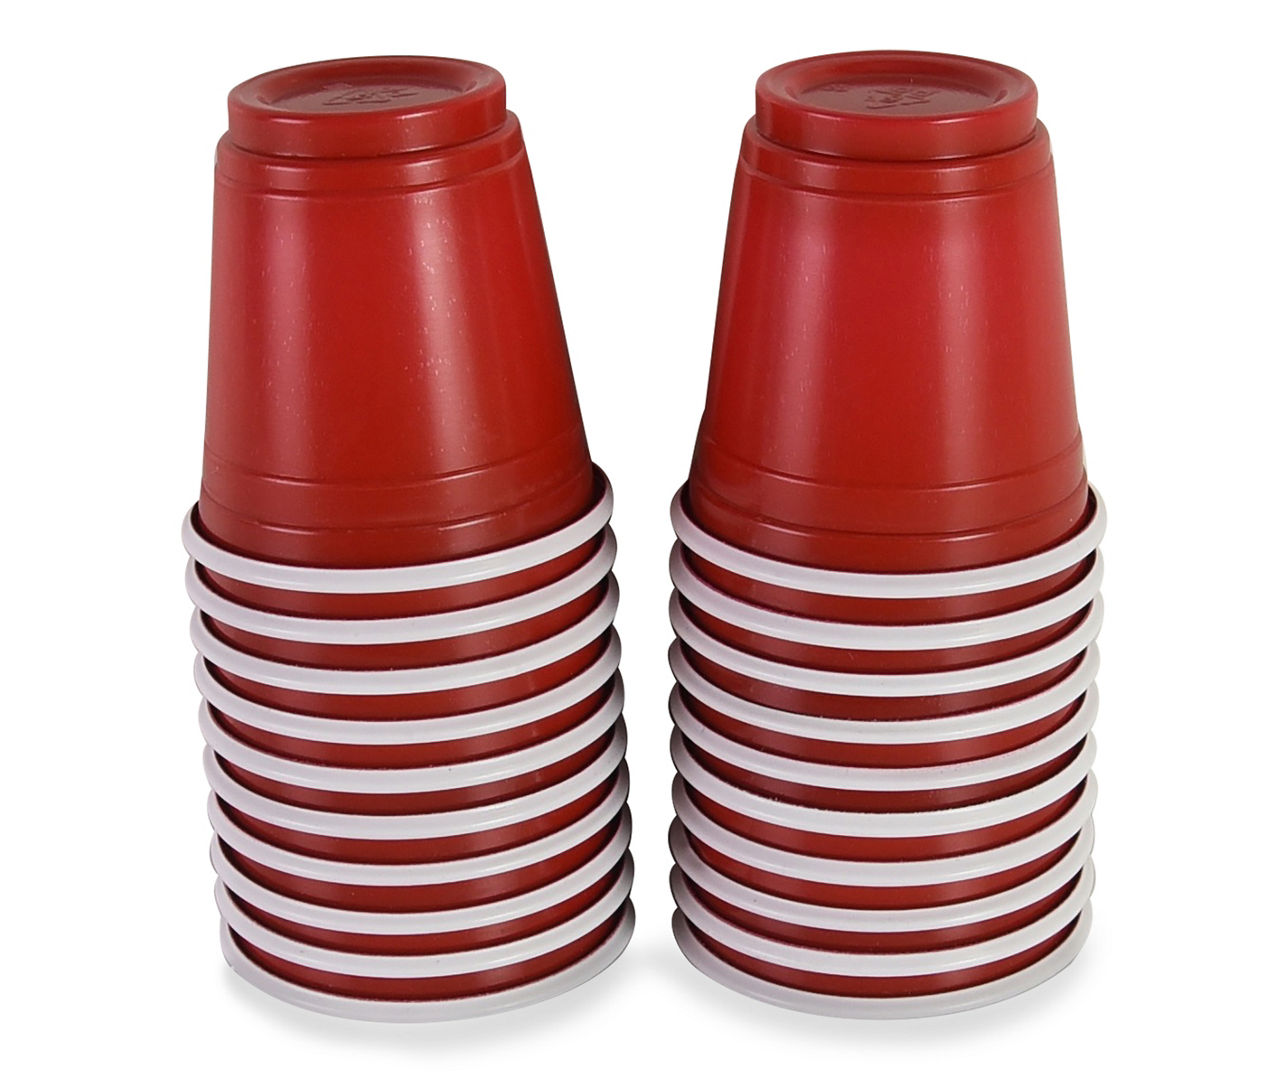 Red Cup 1.5 oz Shot Glasses - Creative Kitchen Fargo